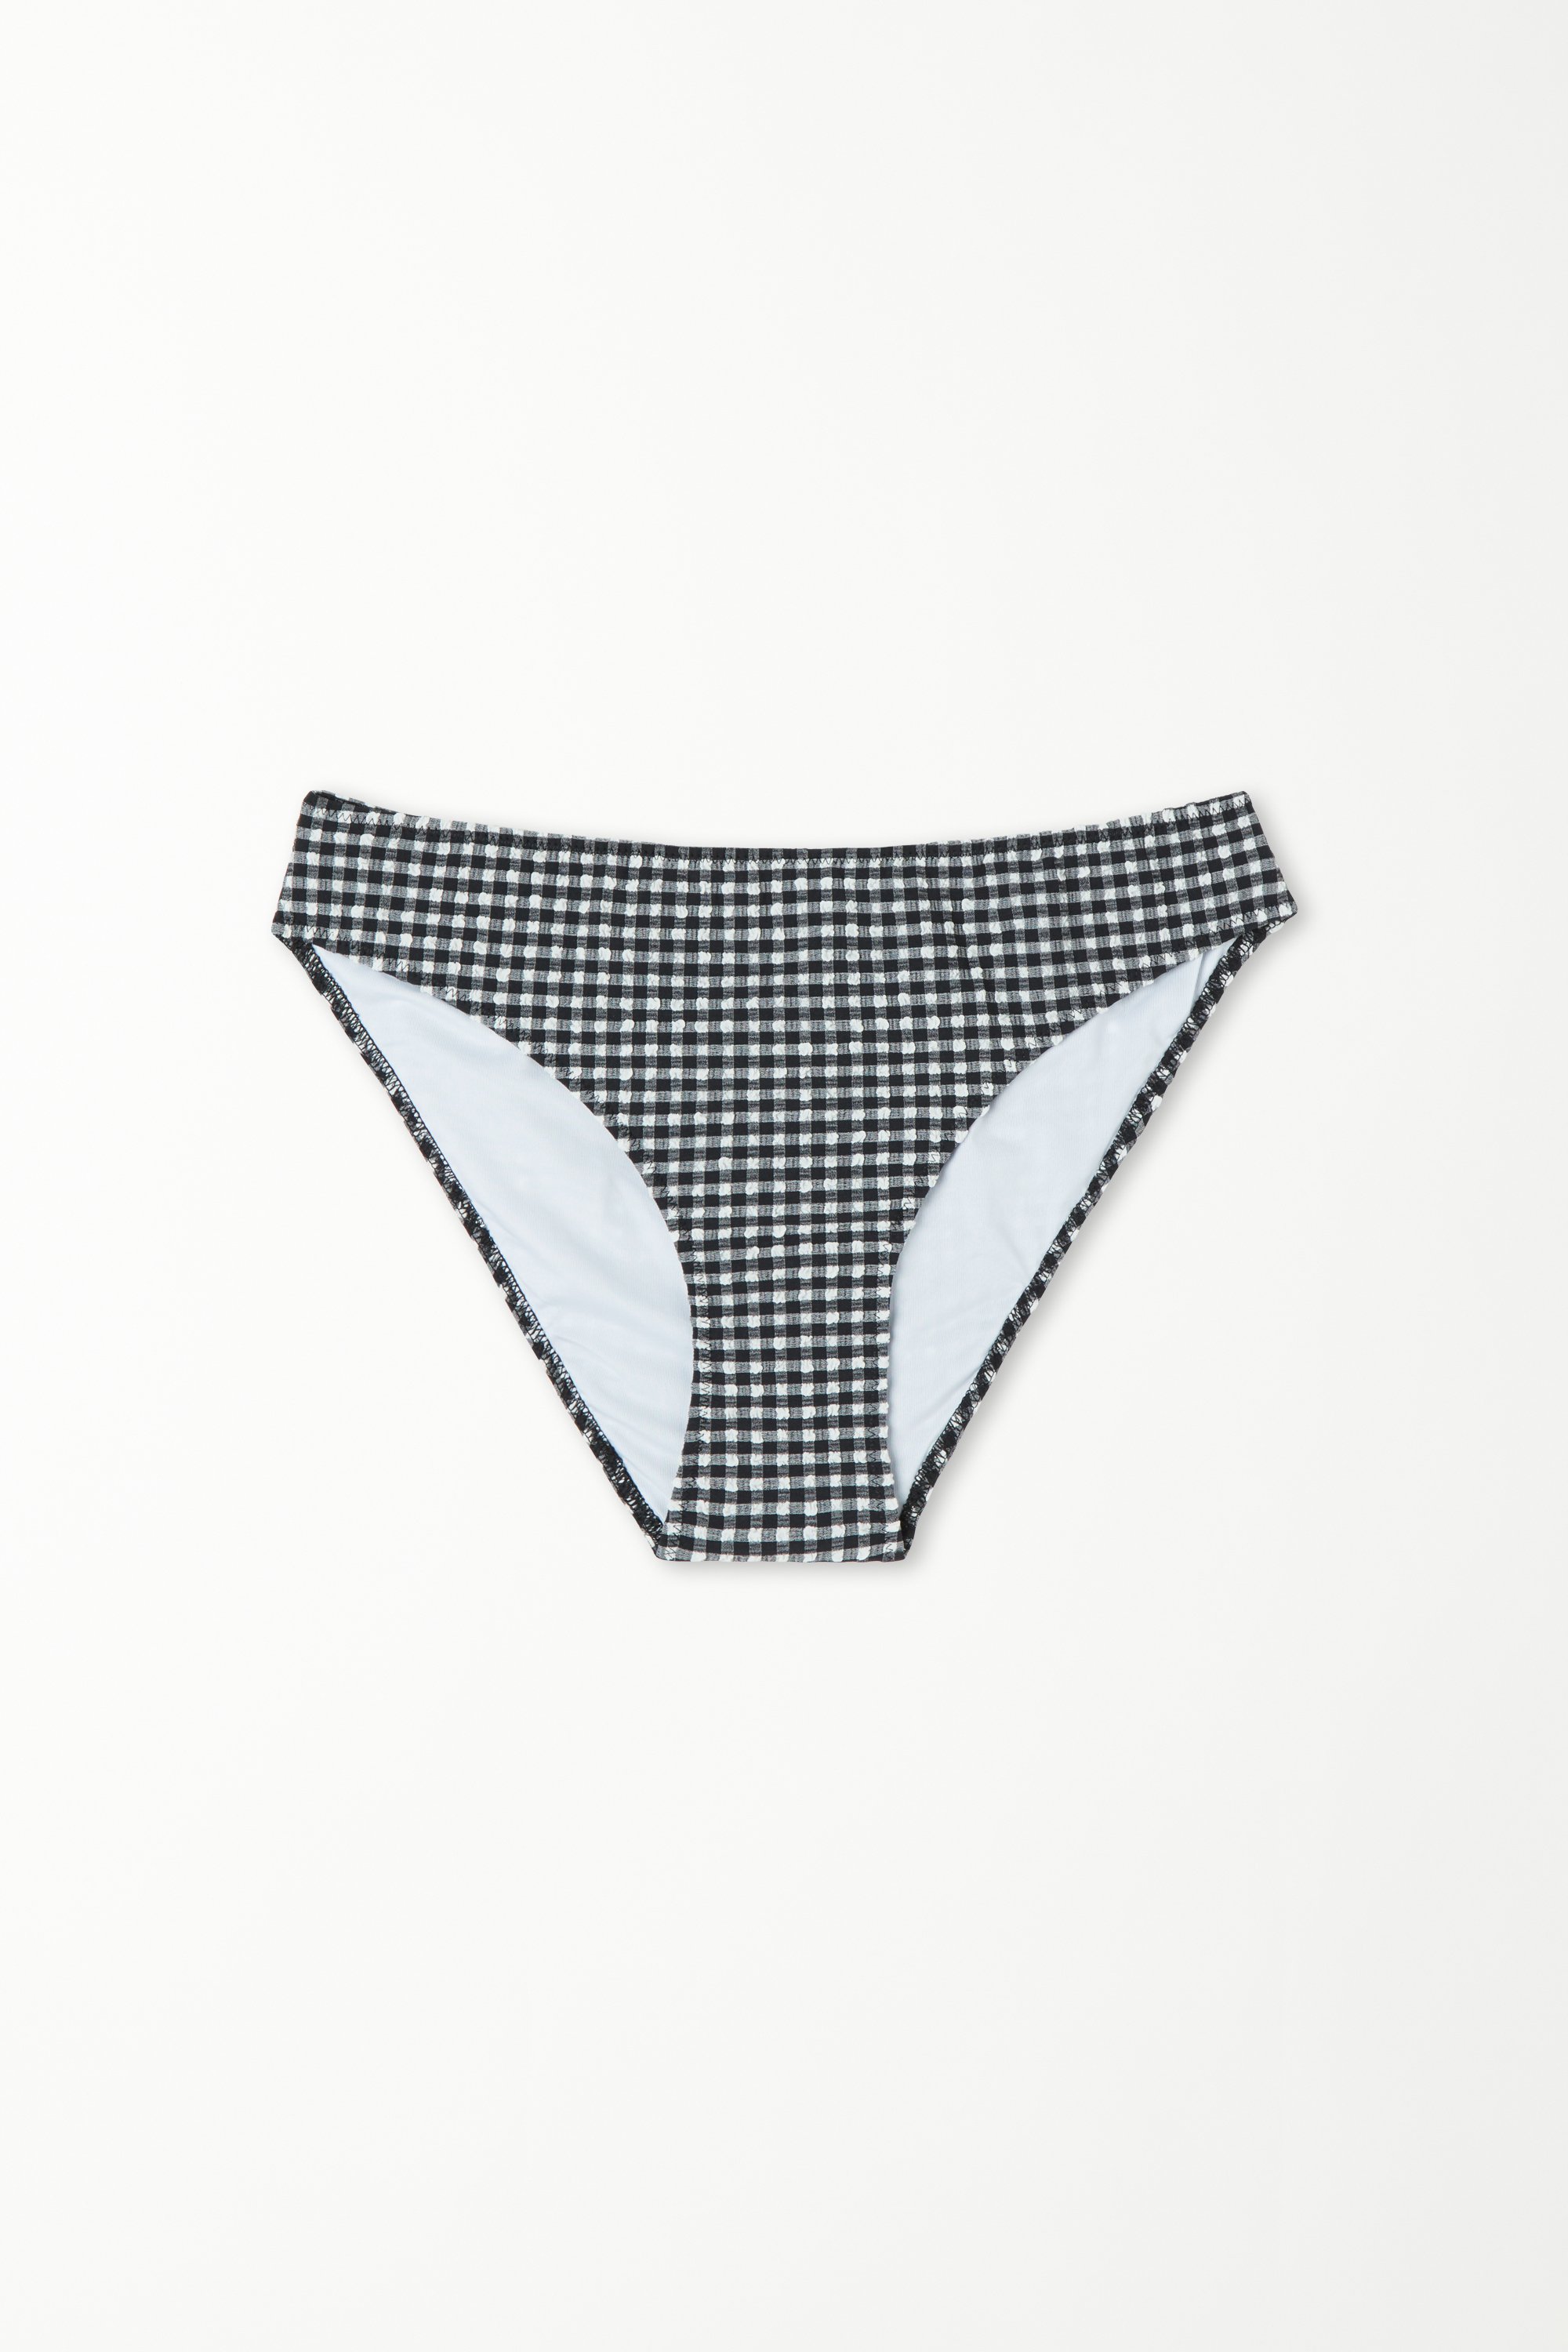 Panty de Bikini Clásico Classy Vichy